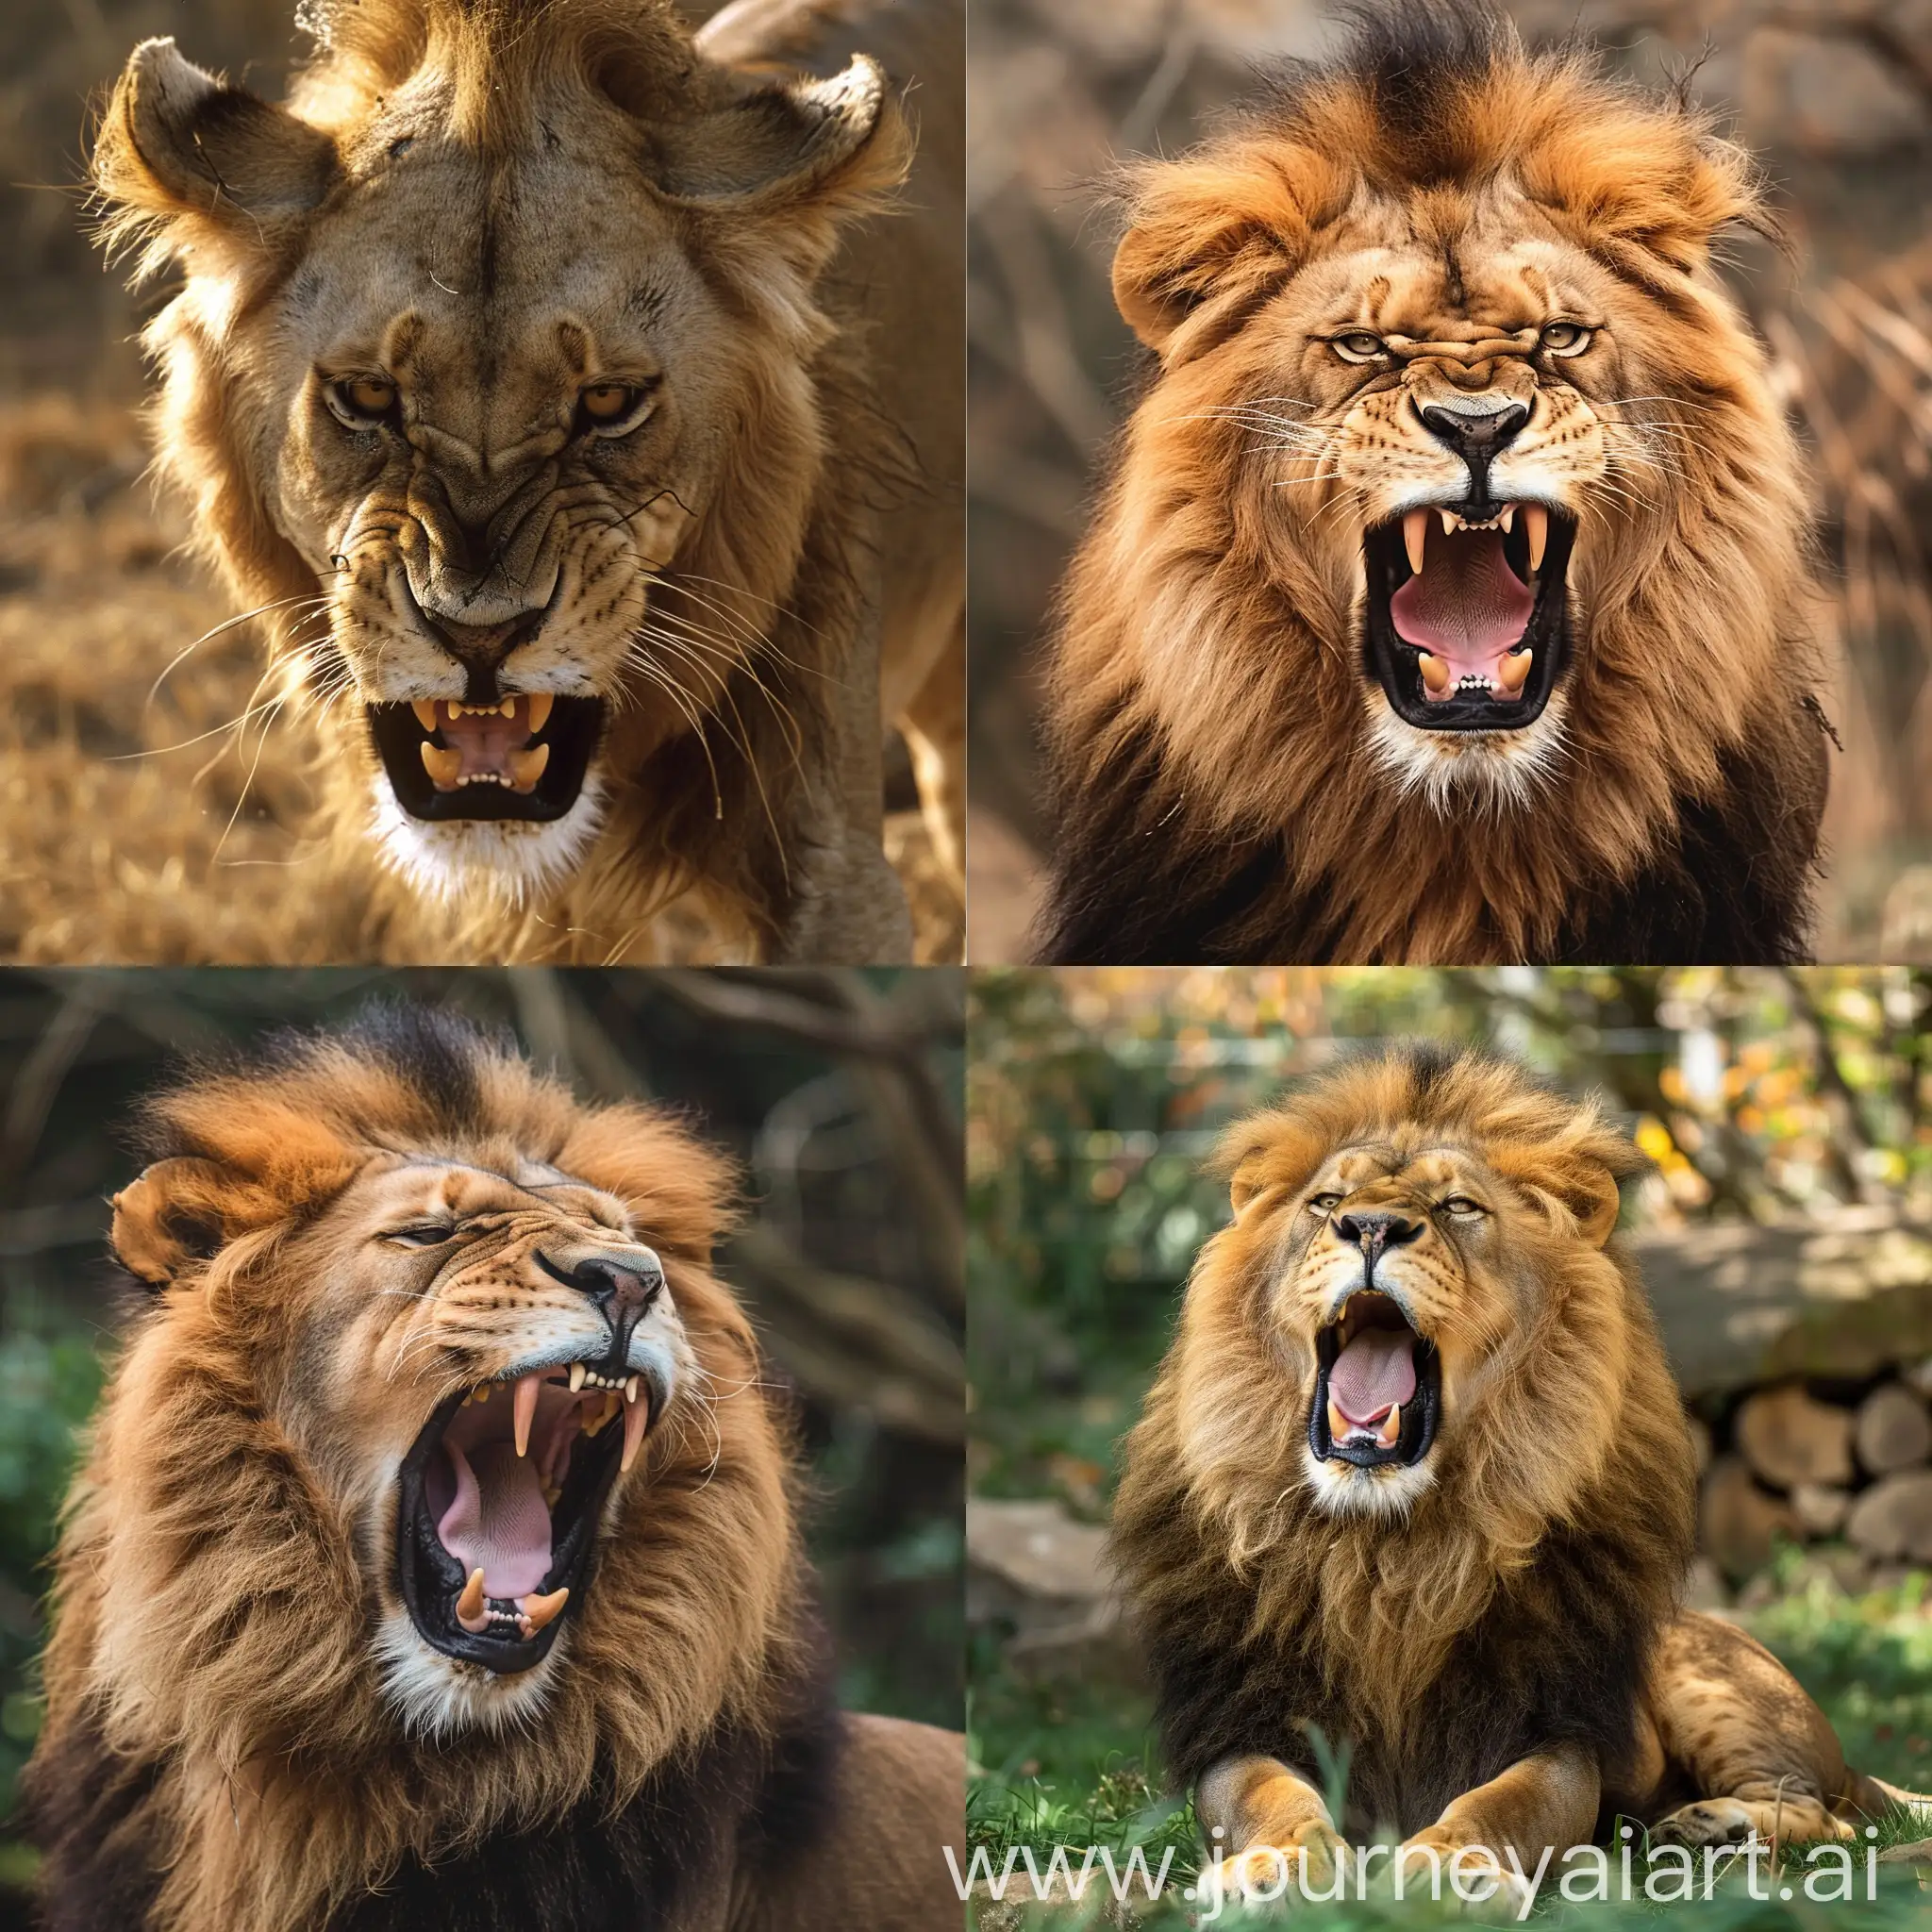 Fierce-African-Lion-with-Maned-Mane-in-a-Grassy-Savanna